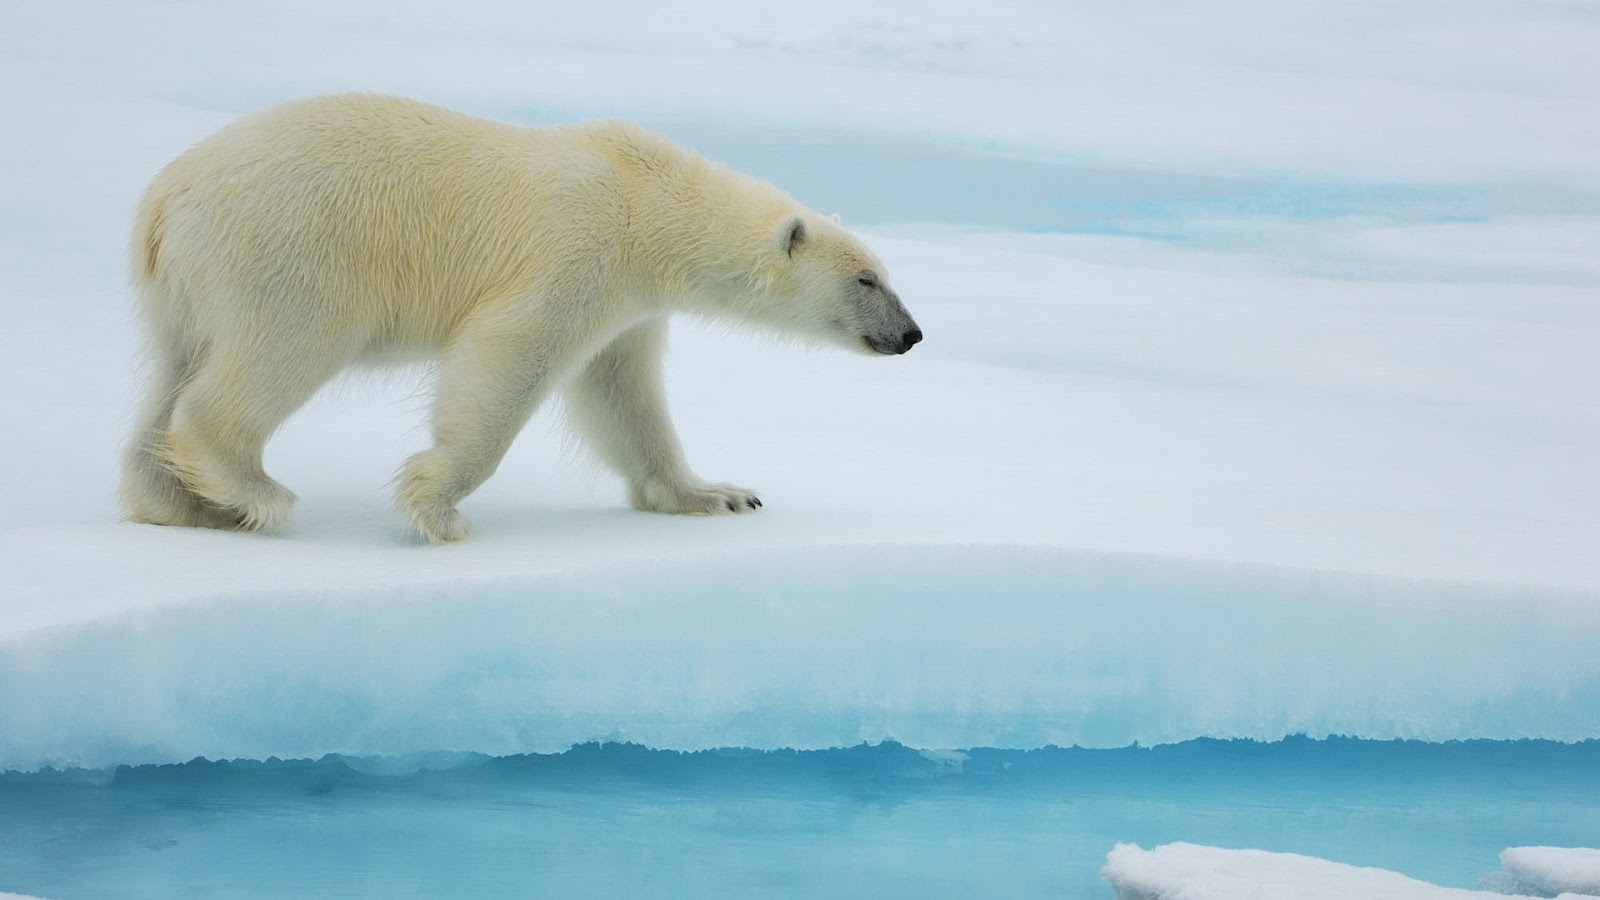 HD Animal Wallpaper With A Big Polar Bear Walking On Ice